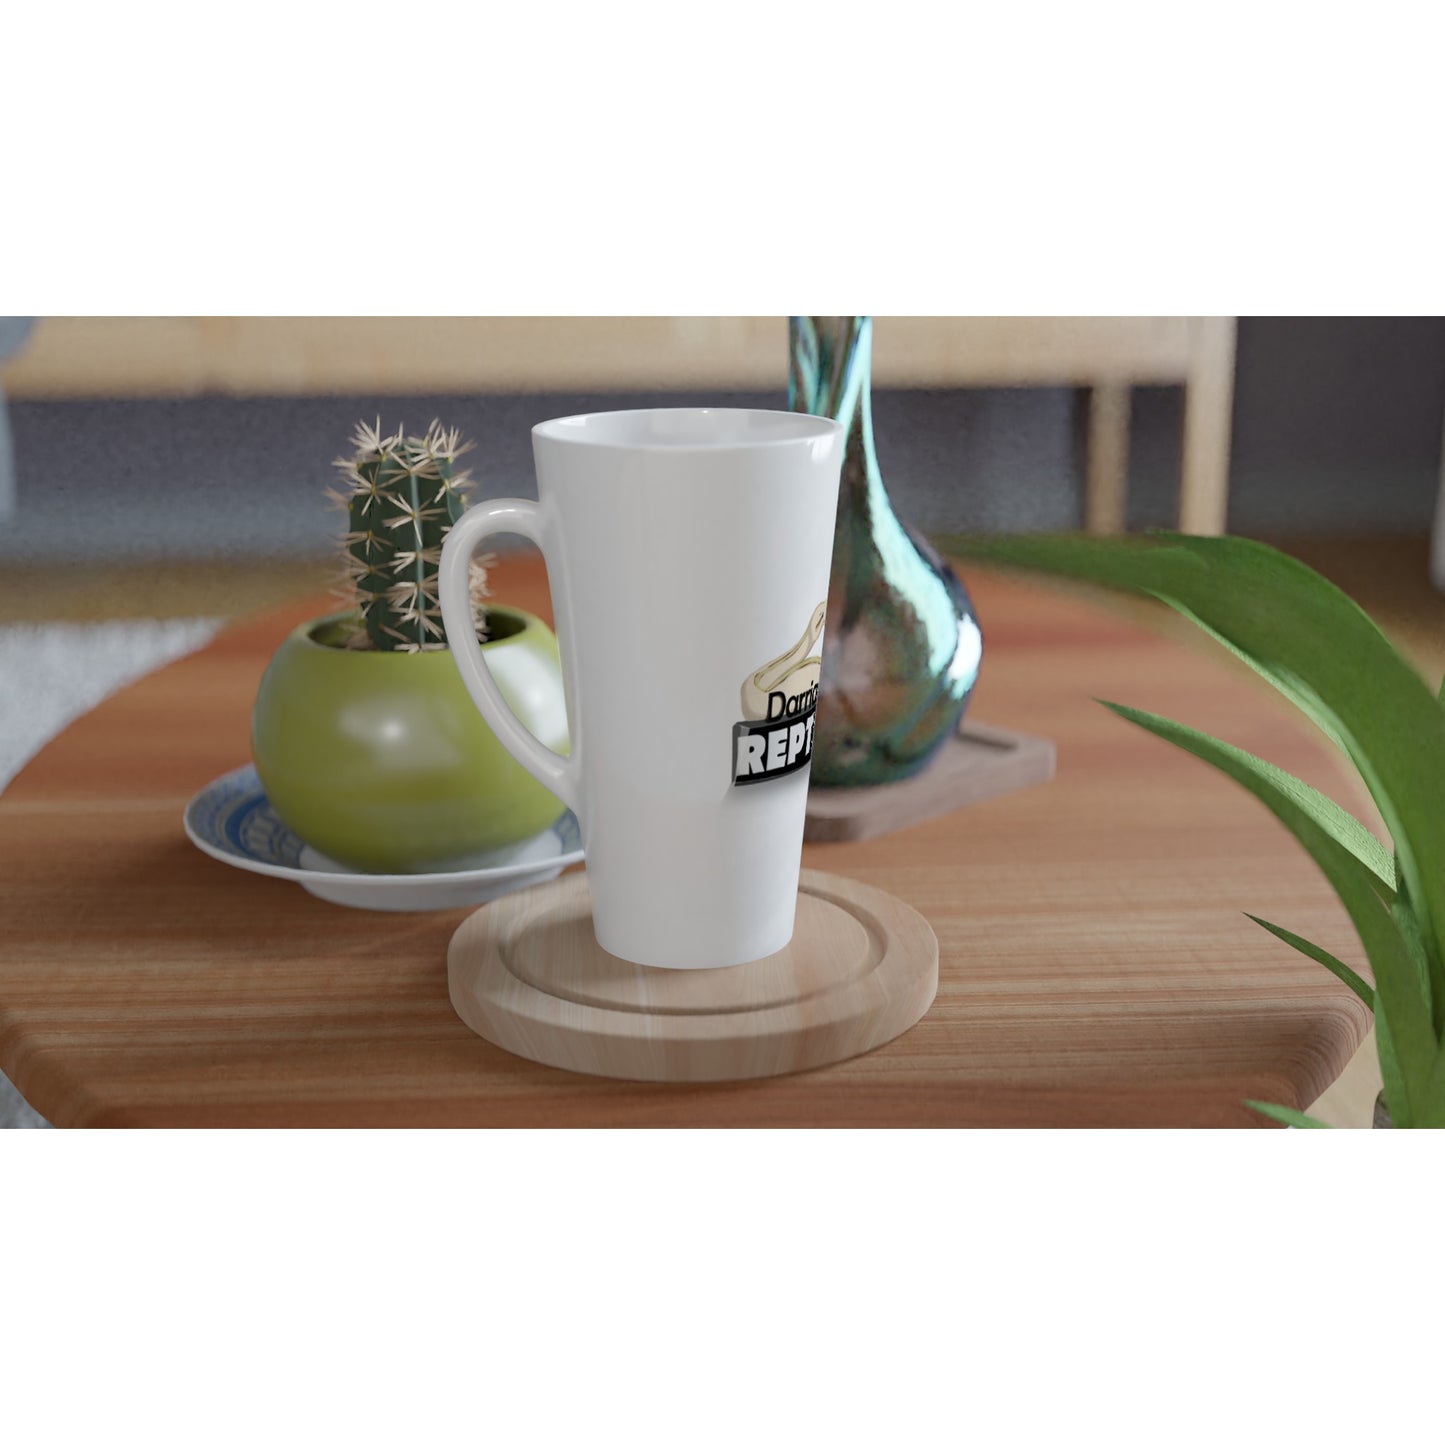 Darrian's Reptile Hub - White Latte 17oz Ceramic Mug